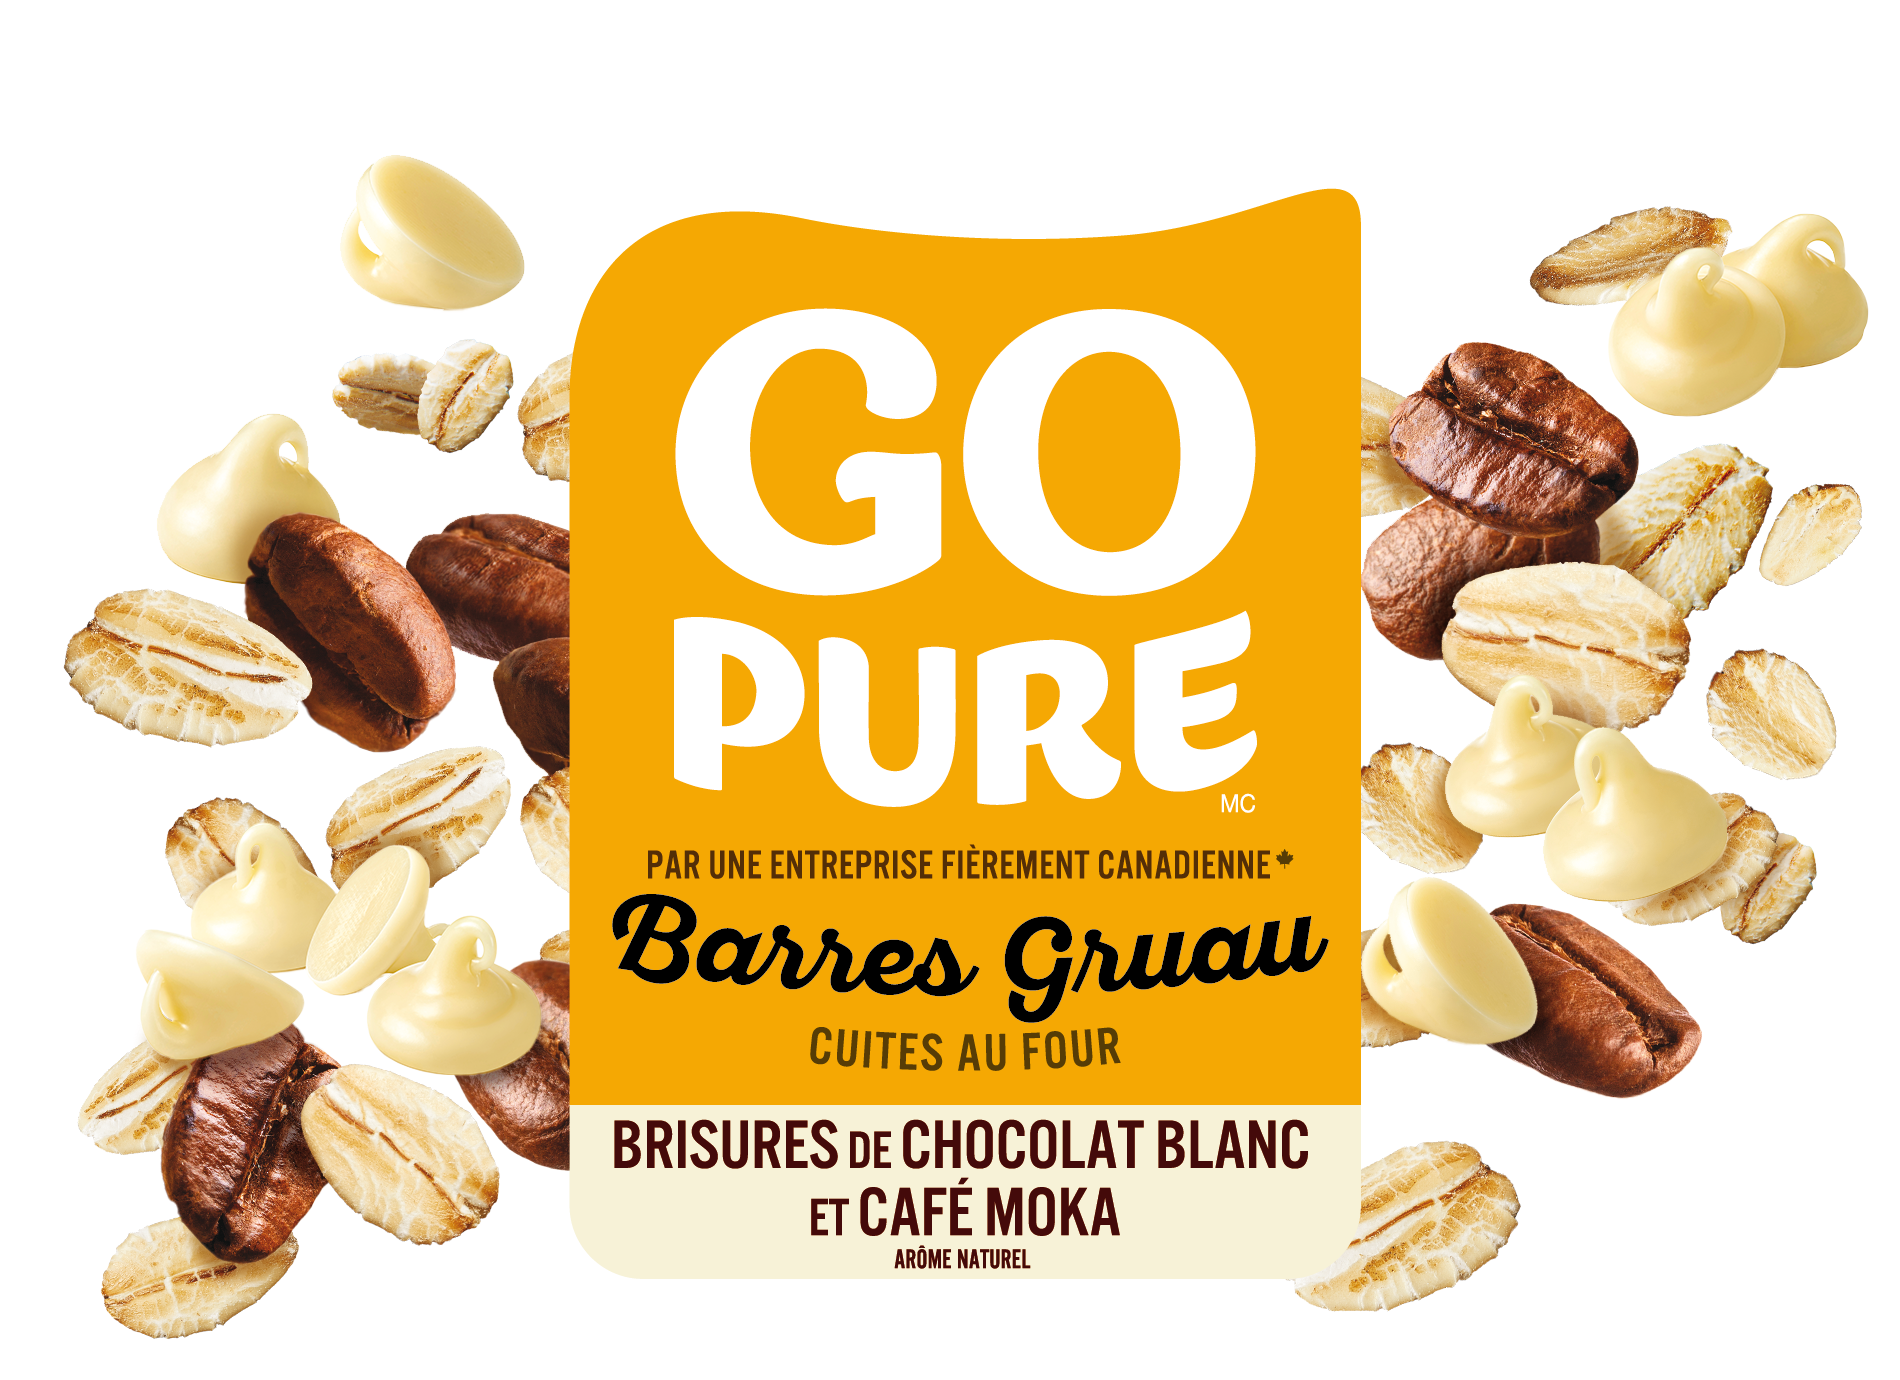 Barres Gruau - Brisures de Chocolat Blanc et Café Moka